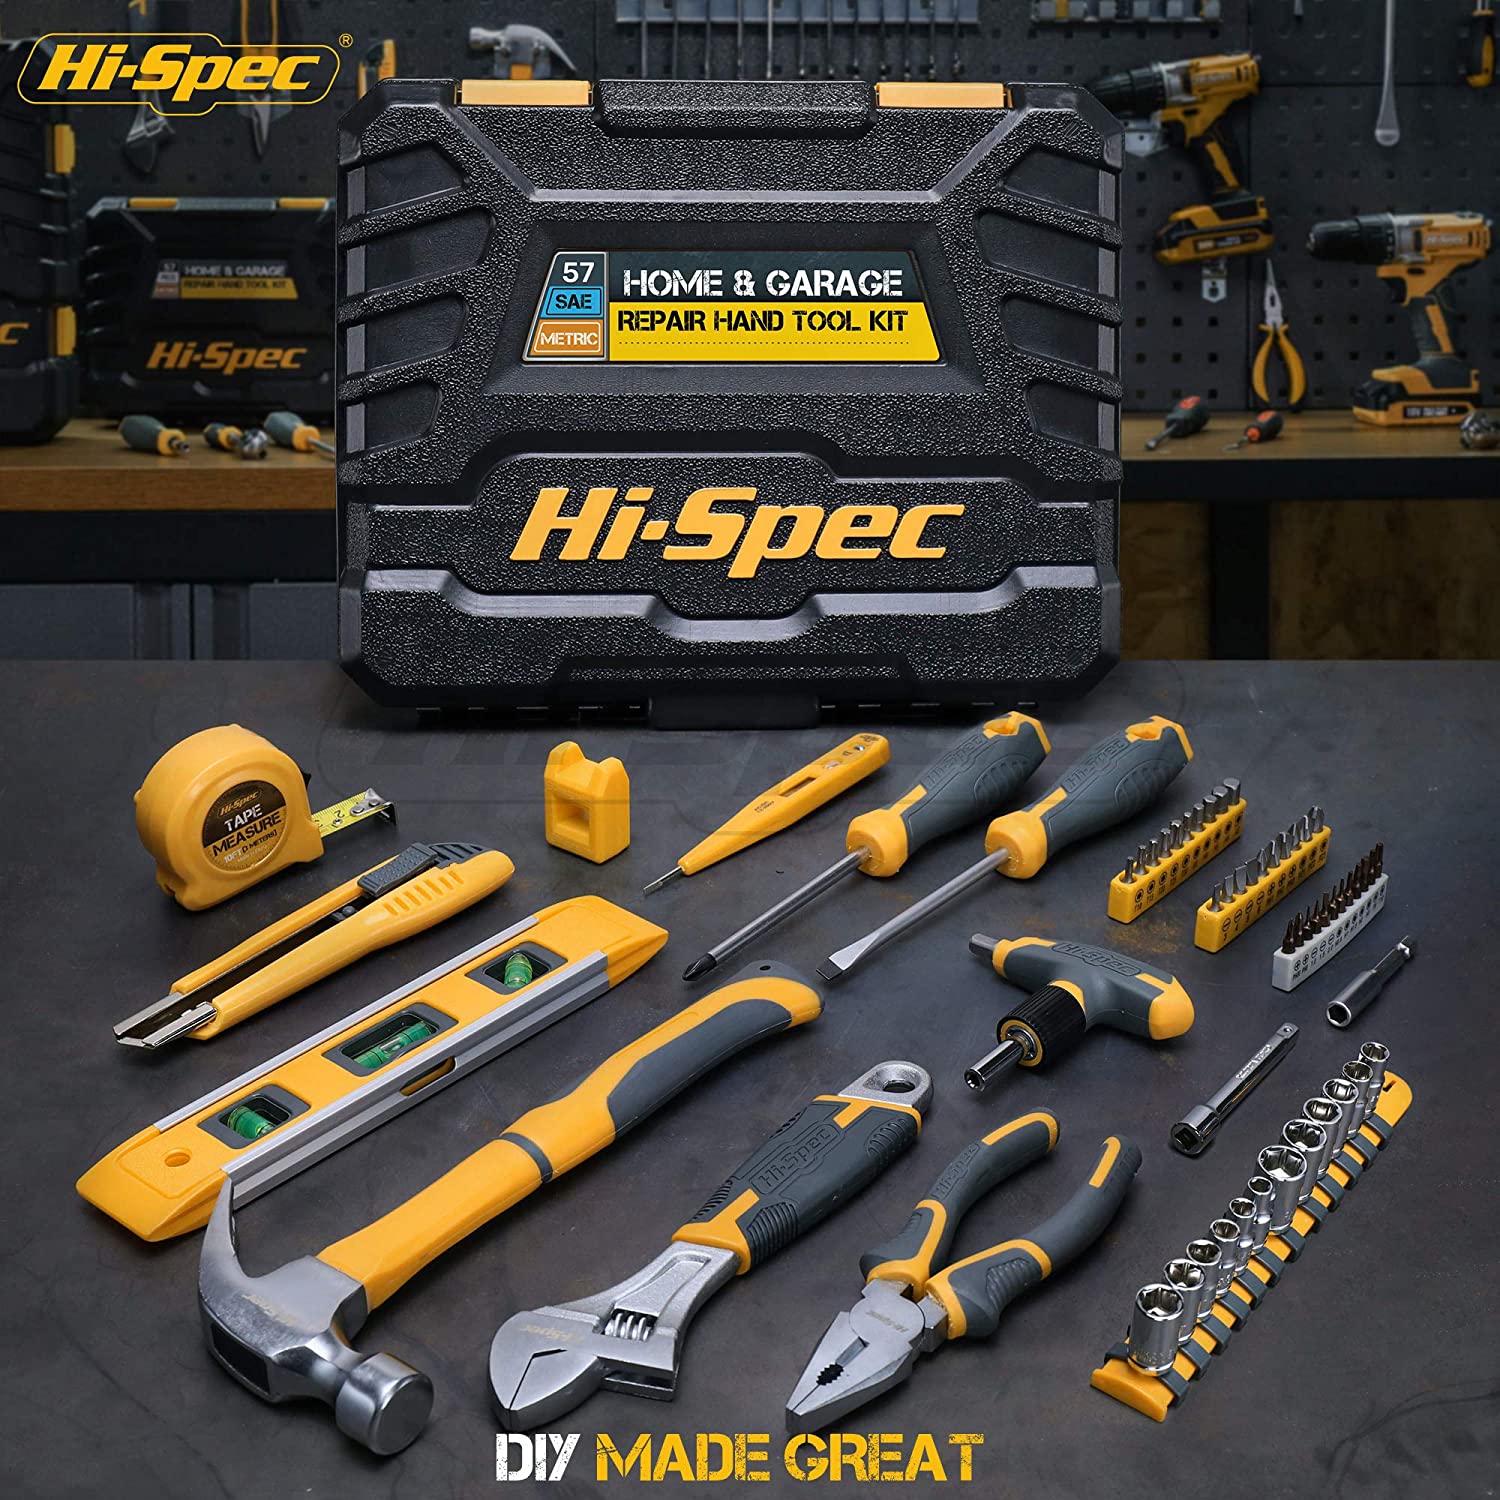 Hi-Spec 54pc Pink Home DIY Tool Kit Set for Women, Office & Garage